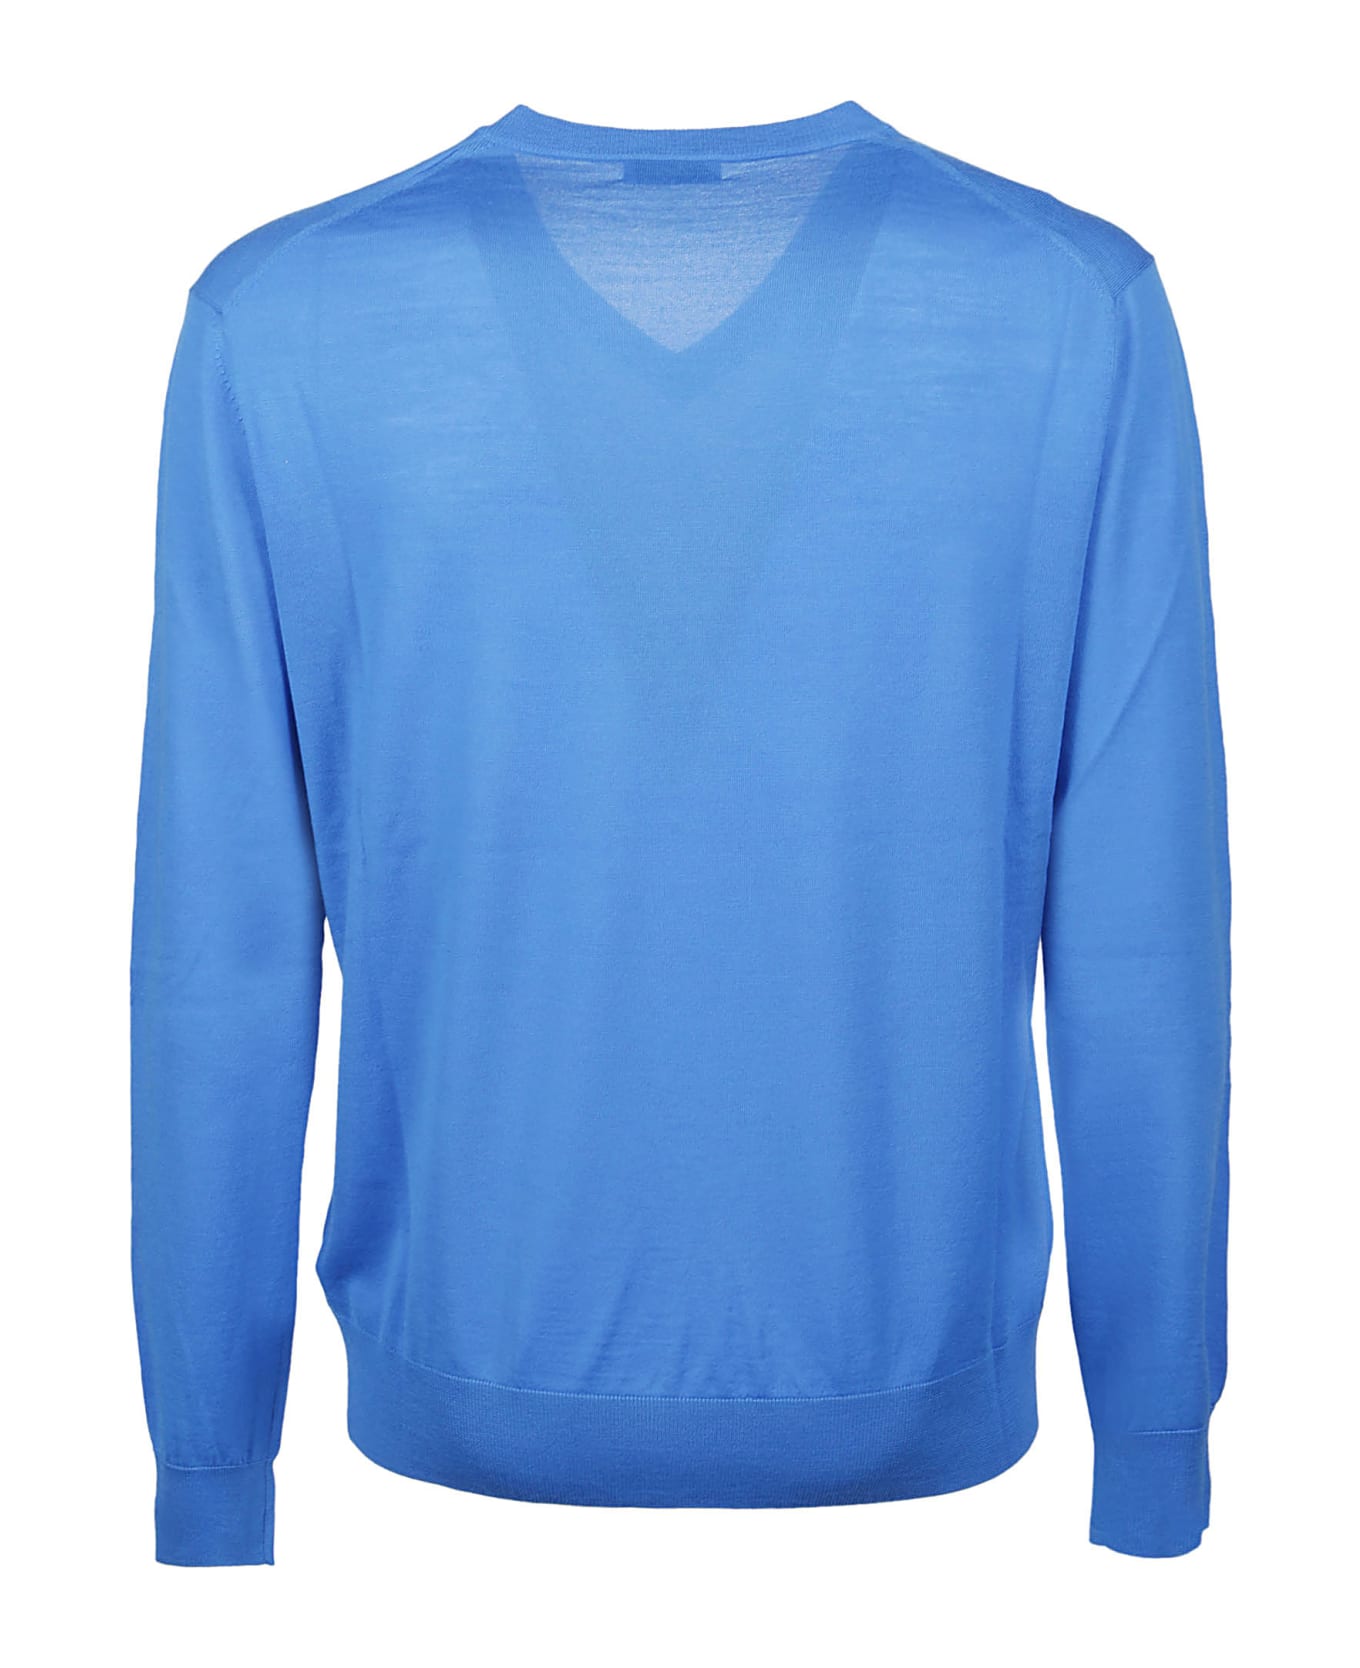 Ballantyne Plain Sweater - Cobalto